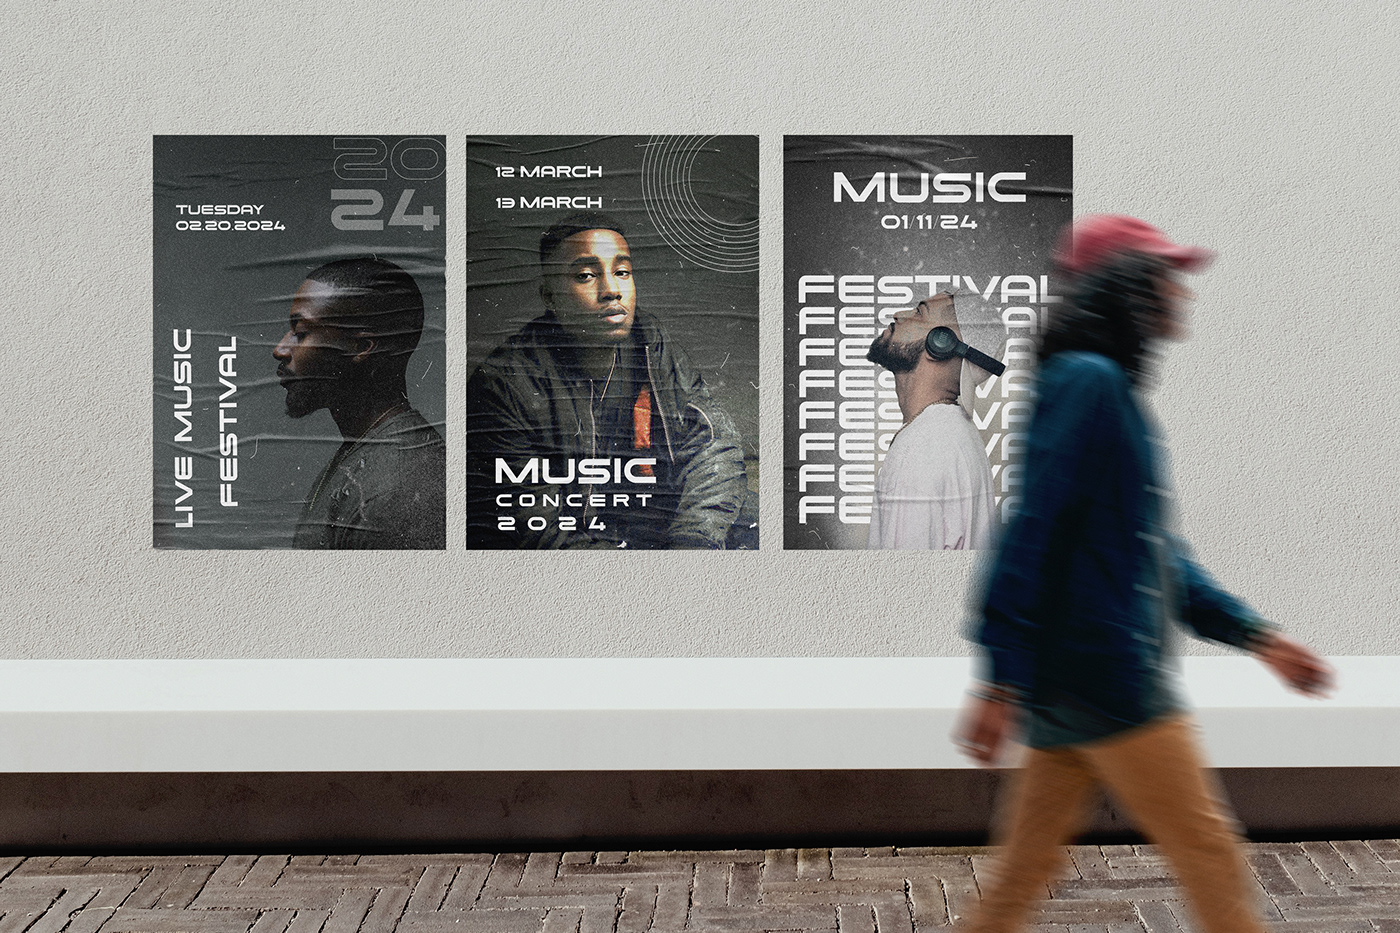 design Adobe Photoshop poster festival music Poster Design graphic design 